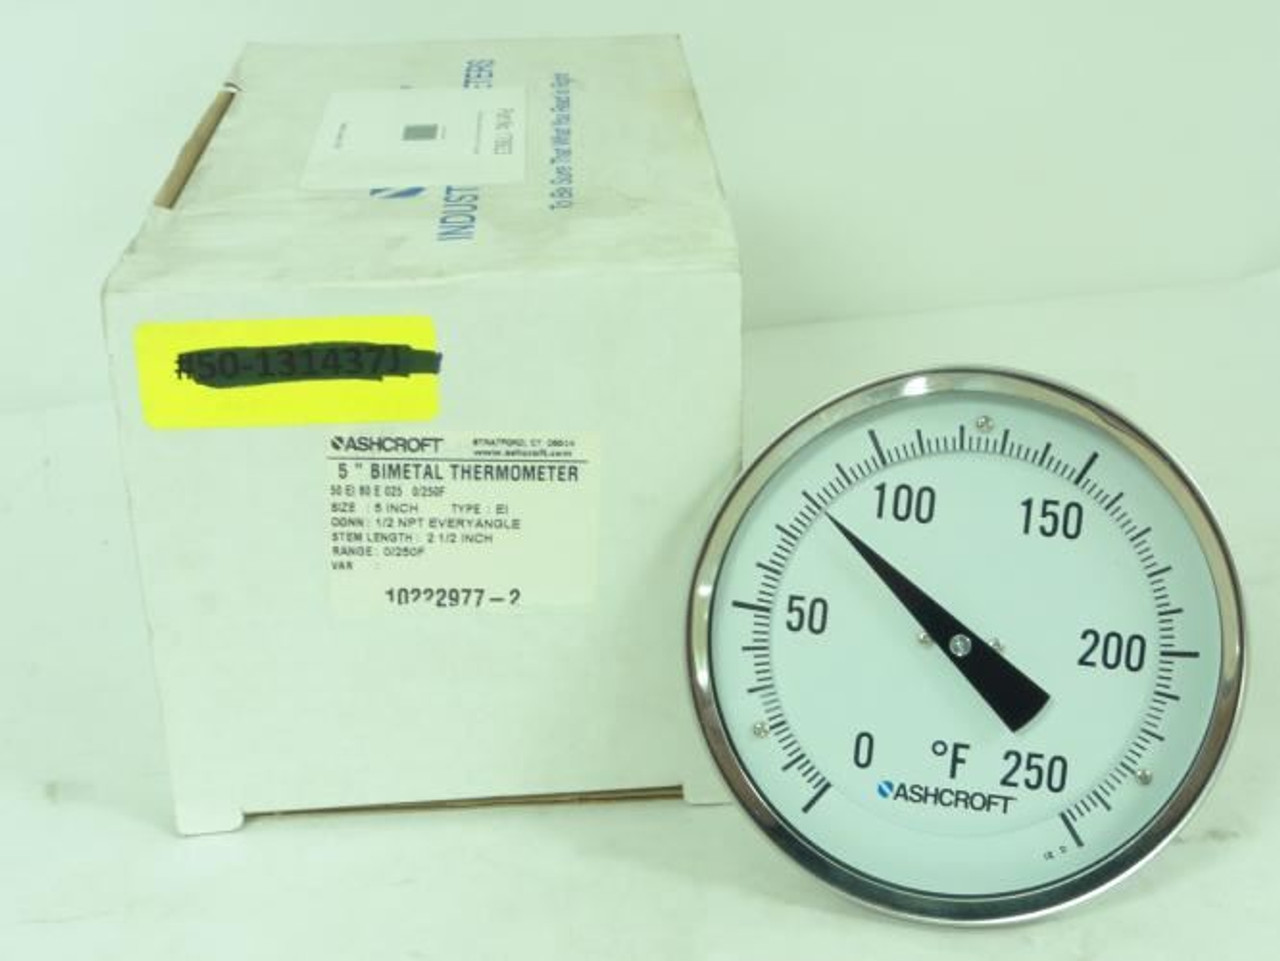 Ashcroft 50EI60E0250/250F; Bimetal Thermometer; 0-250F; 1/2NPT